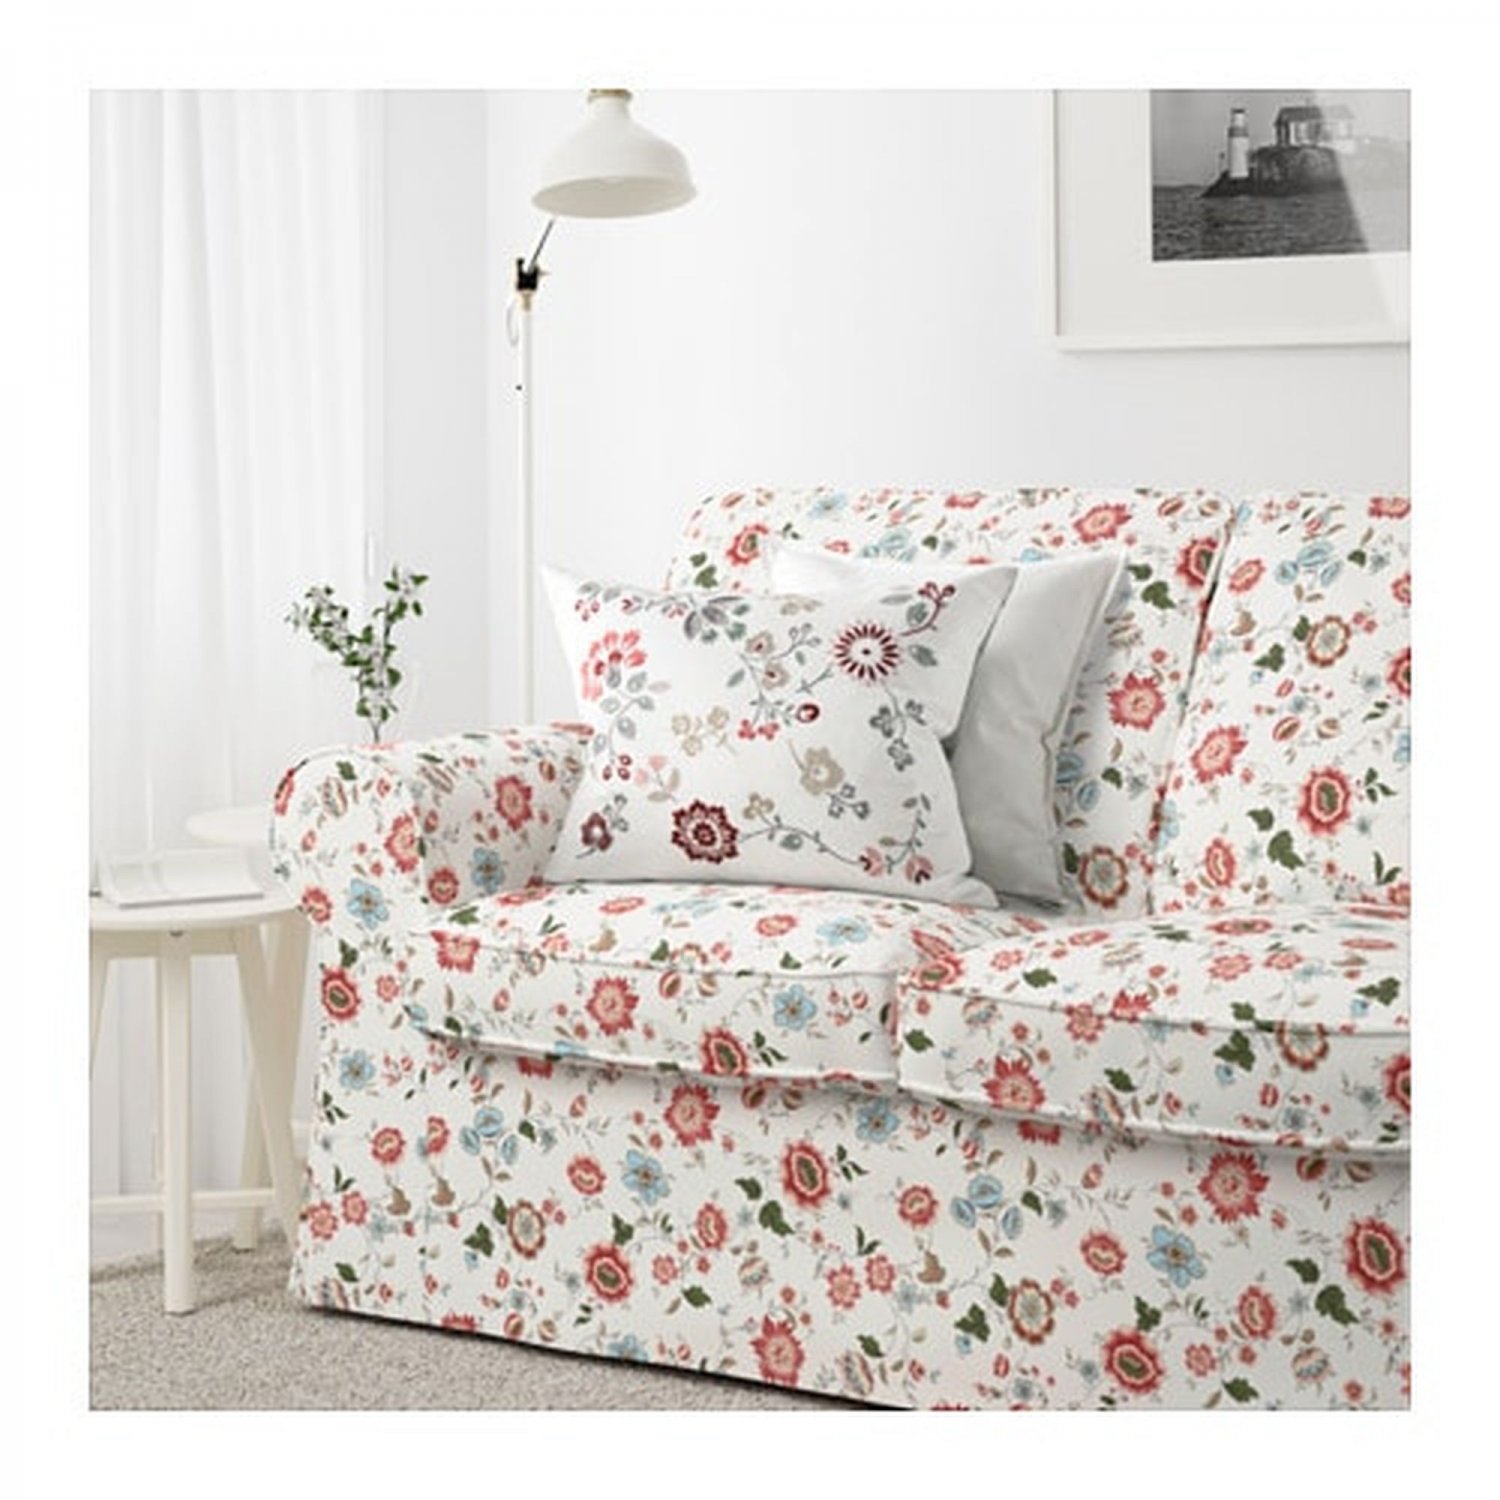 Ikea Ektorp 3 Seat Sofa Cover Slipcover Videslund Multi Floral Bezug Housse New 